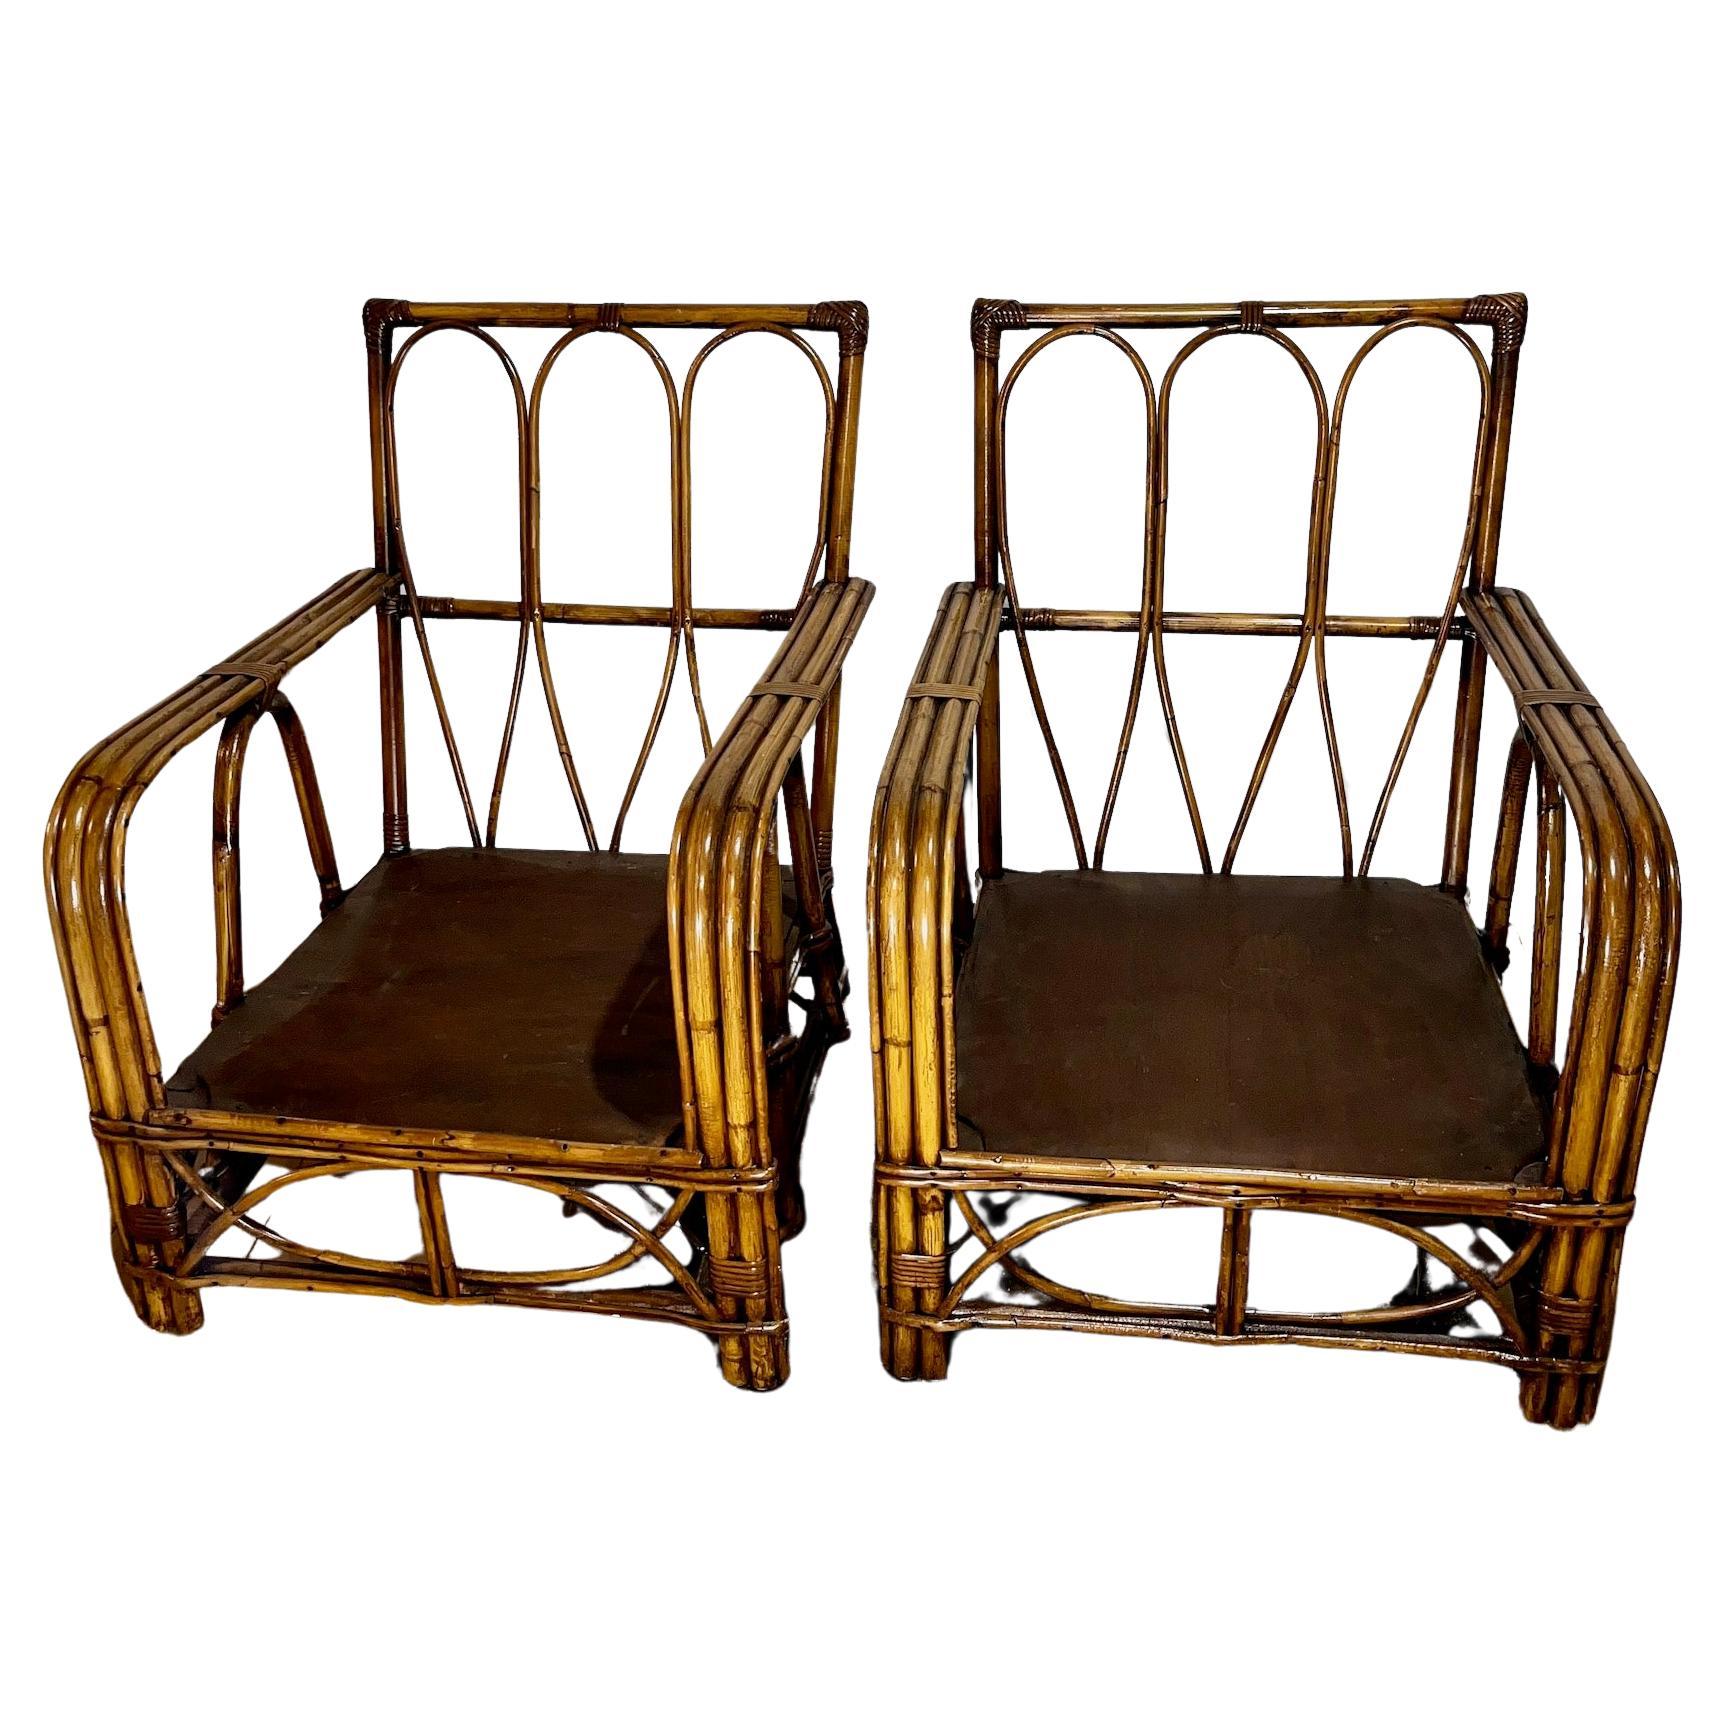 A pair of Mid Century Modern Rattan Club Chairs